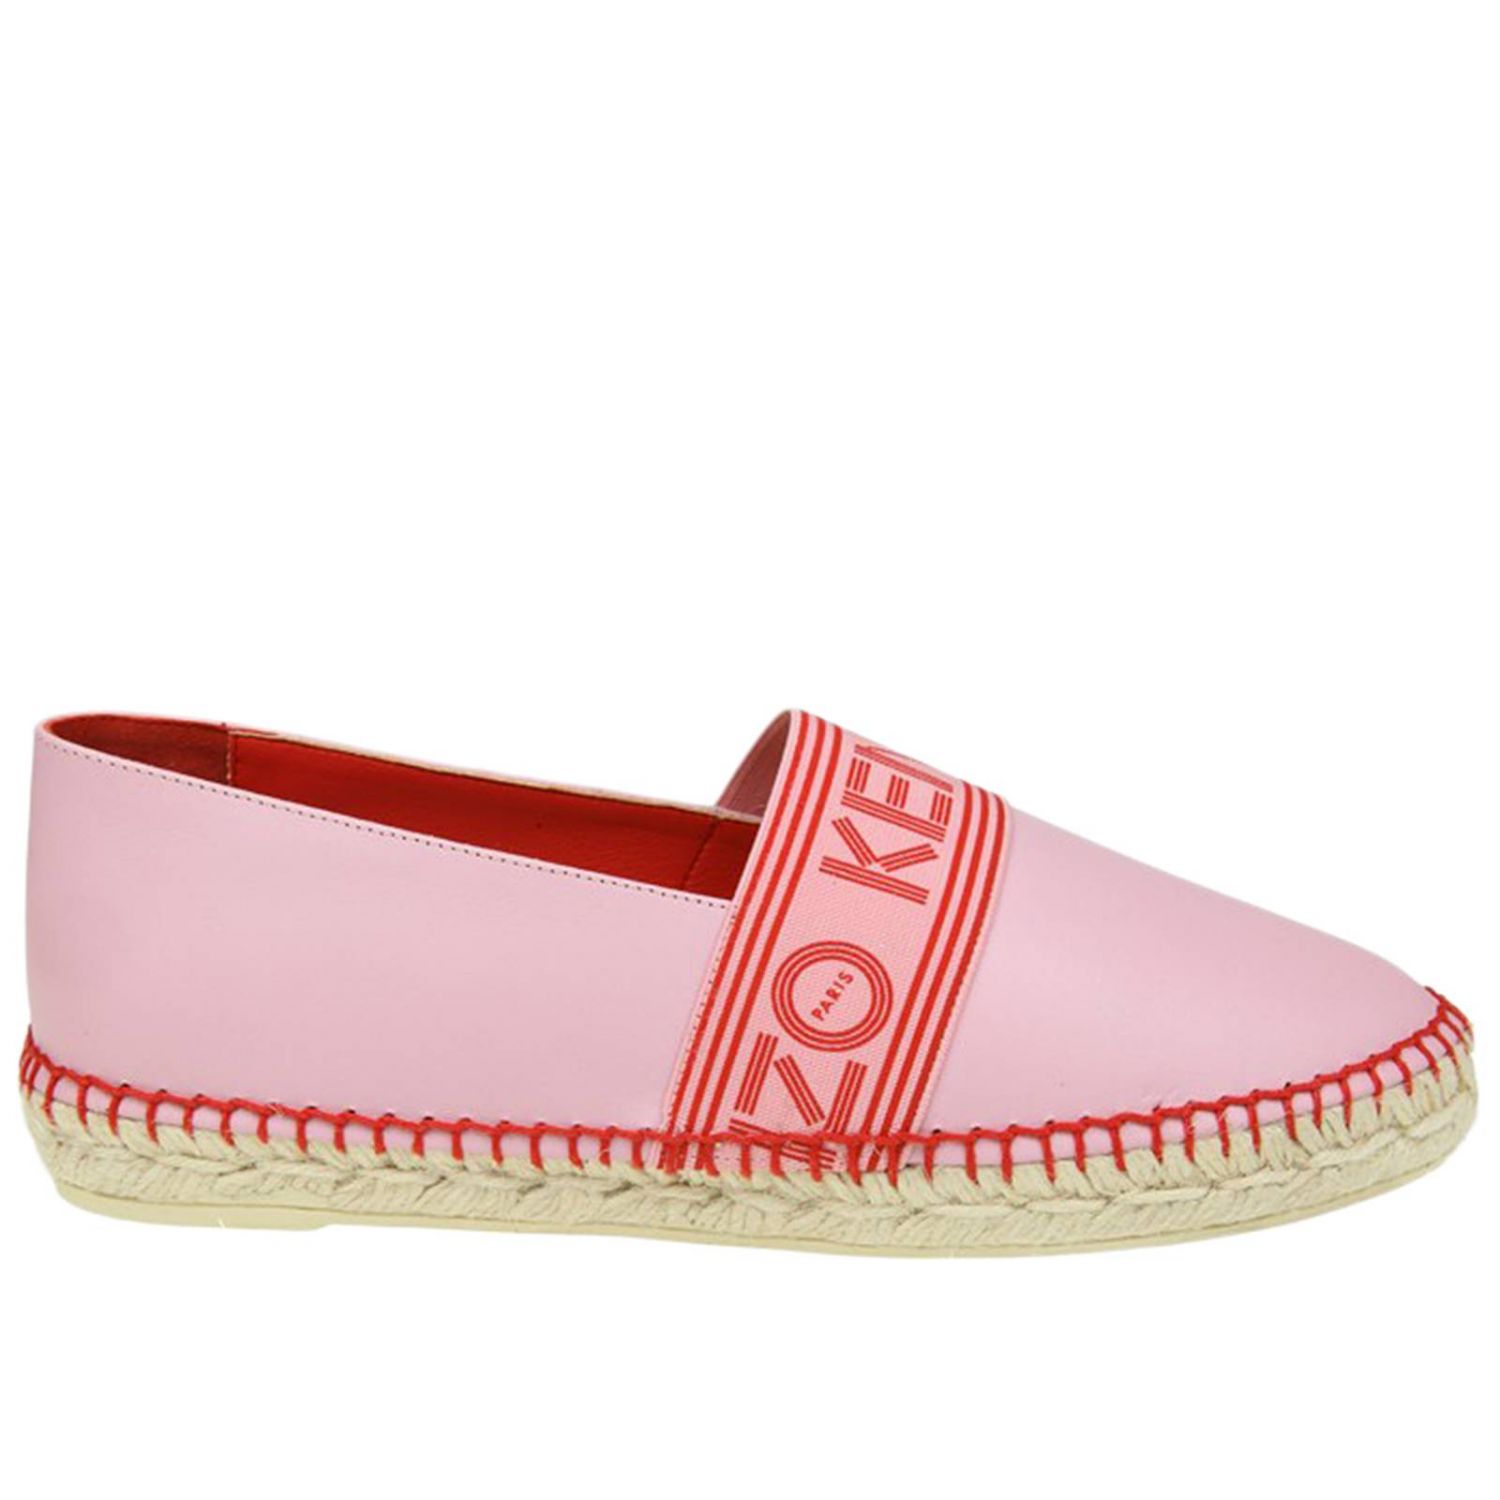 Kenzo Outlet: Flat shoes women | Espadrilles Kenzo Women Pink ...